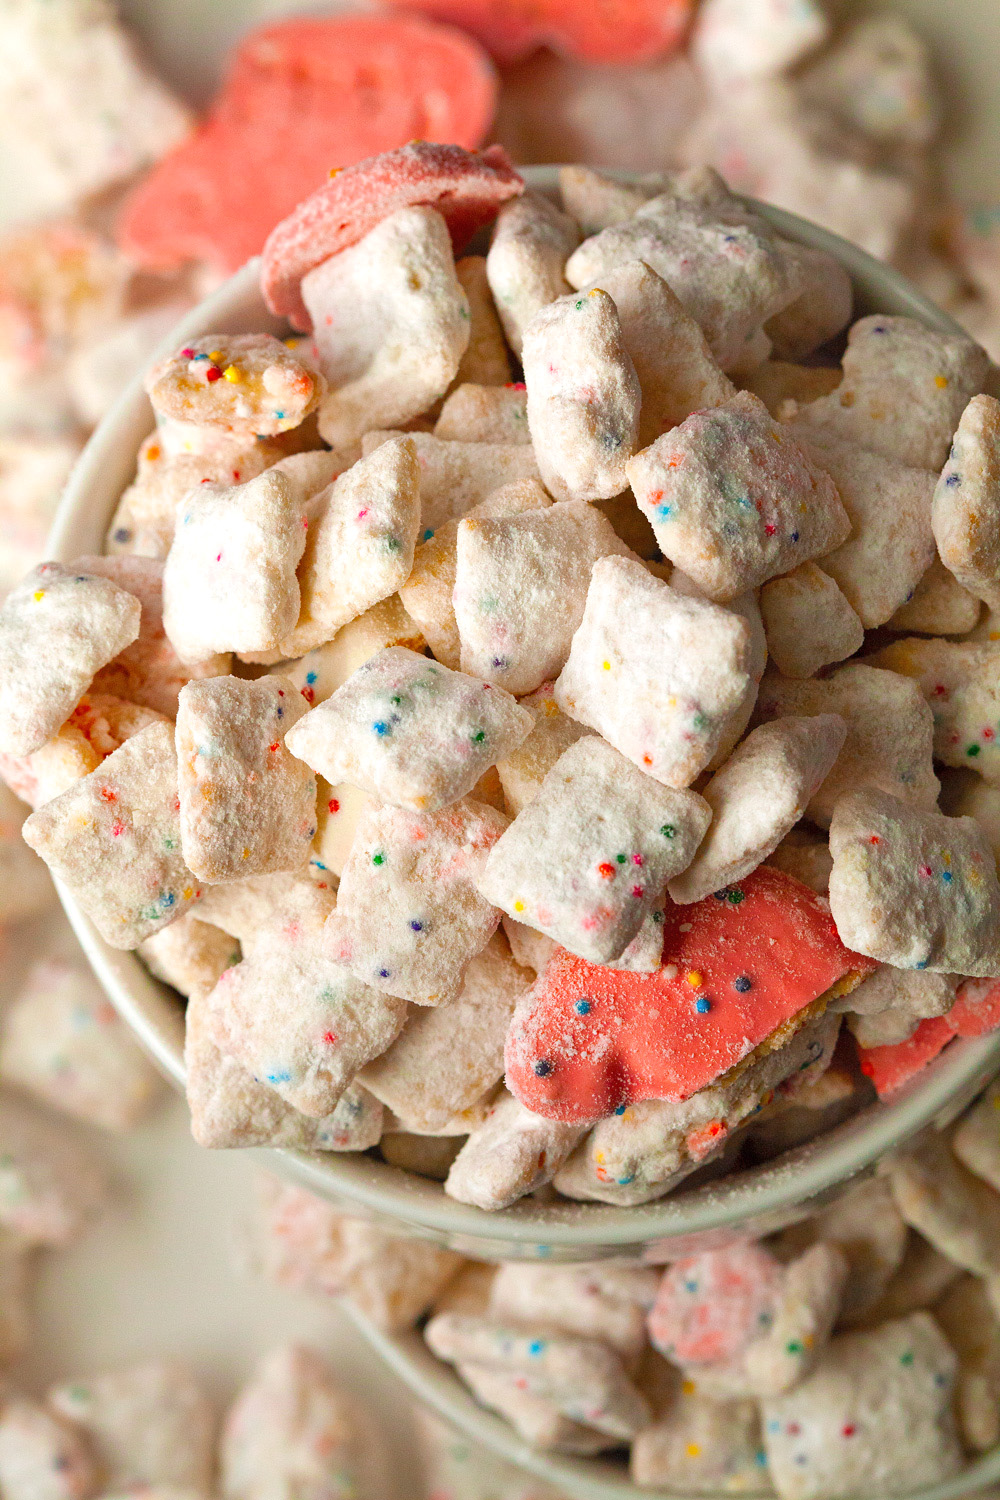 Frosted Animal Cracker Confetti Cake Muddy Buddies via Deliciously Yum!